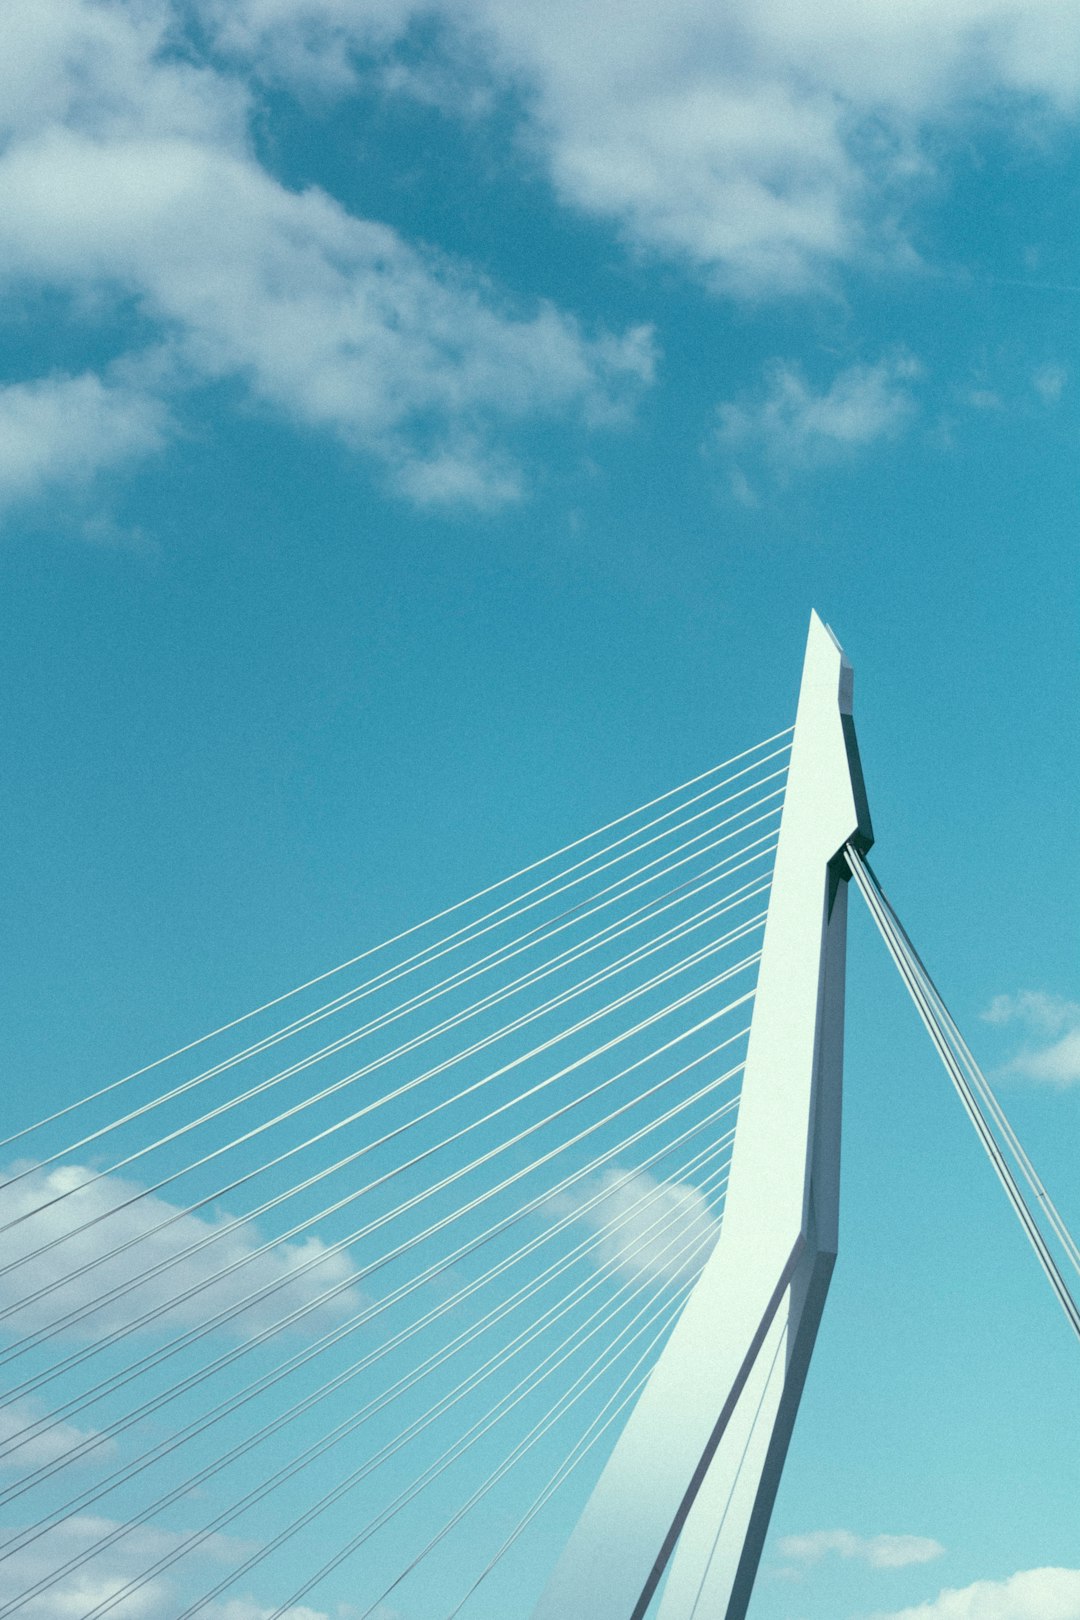 Suspension bridge photo spot Rotterdam Nijmegen